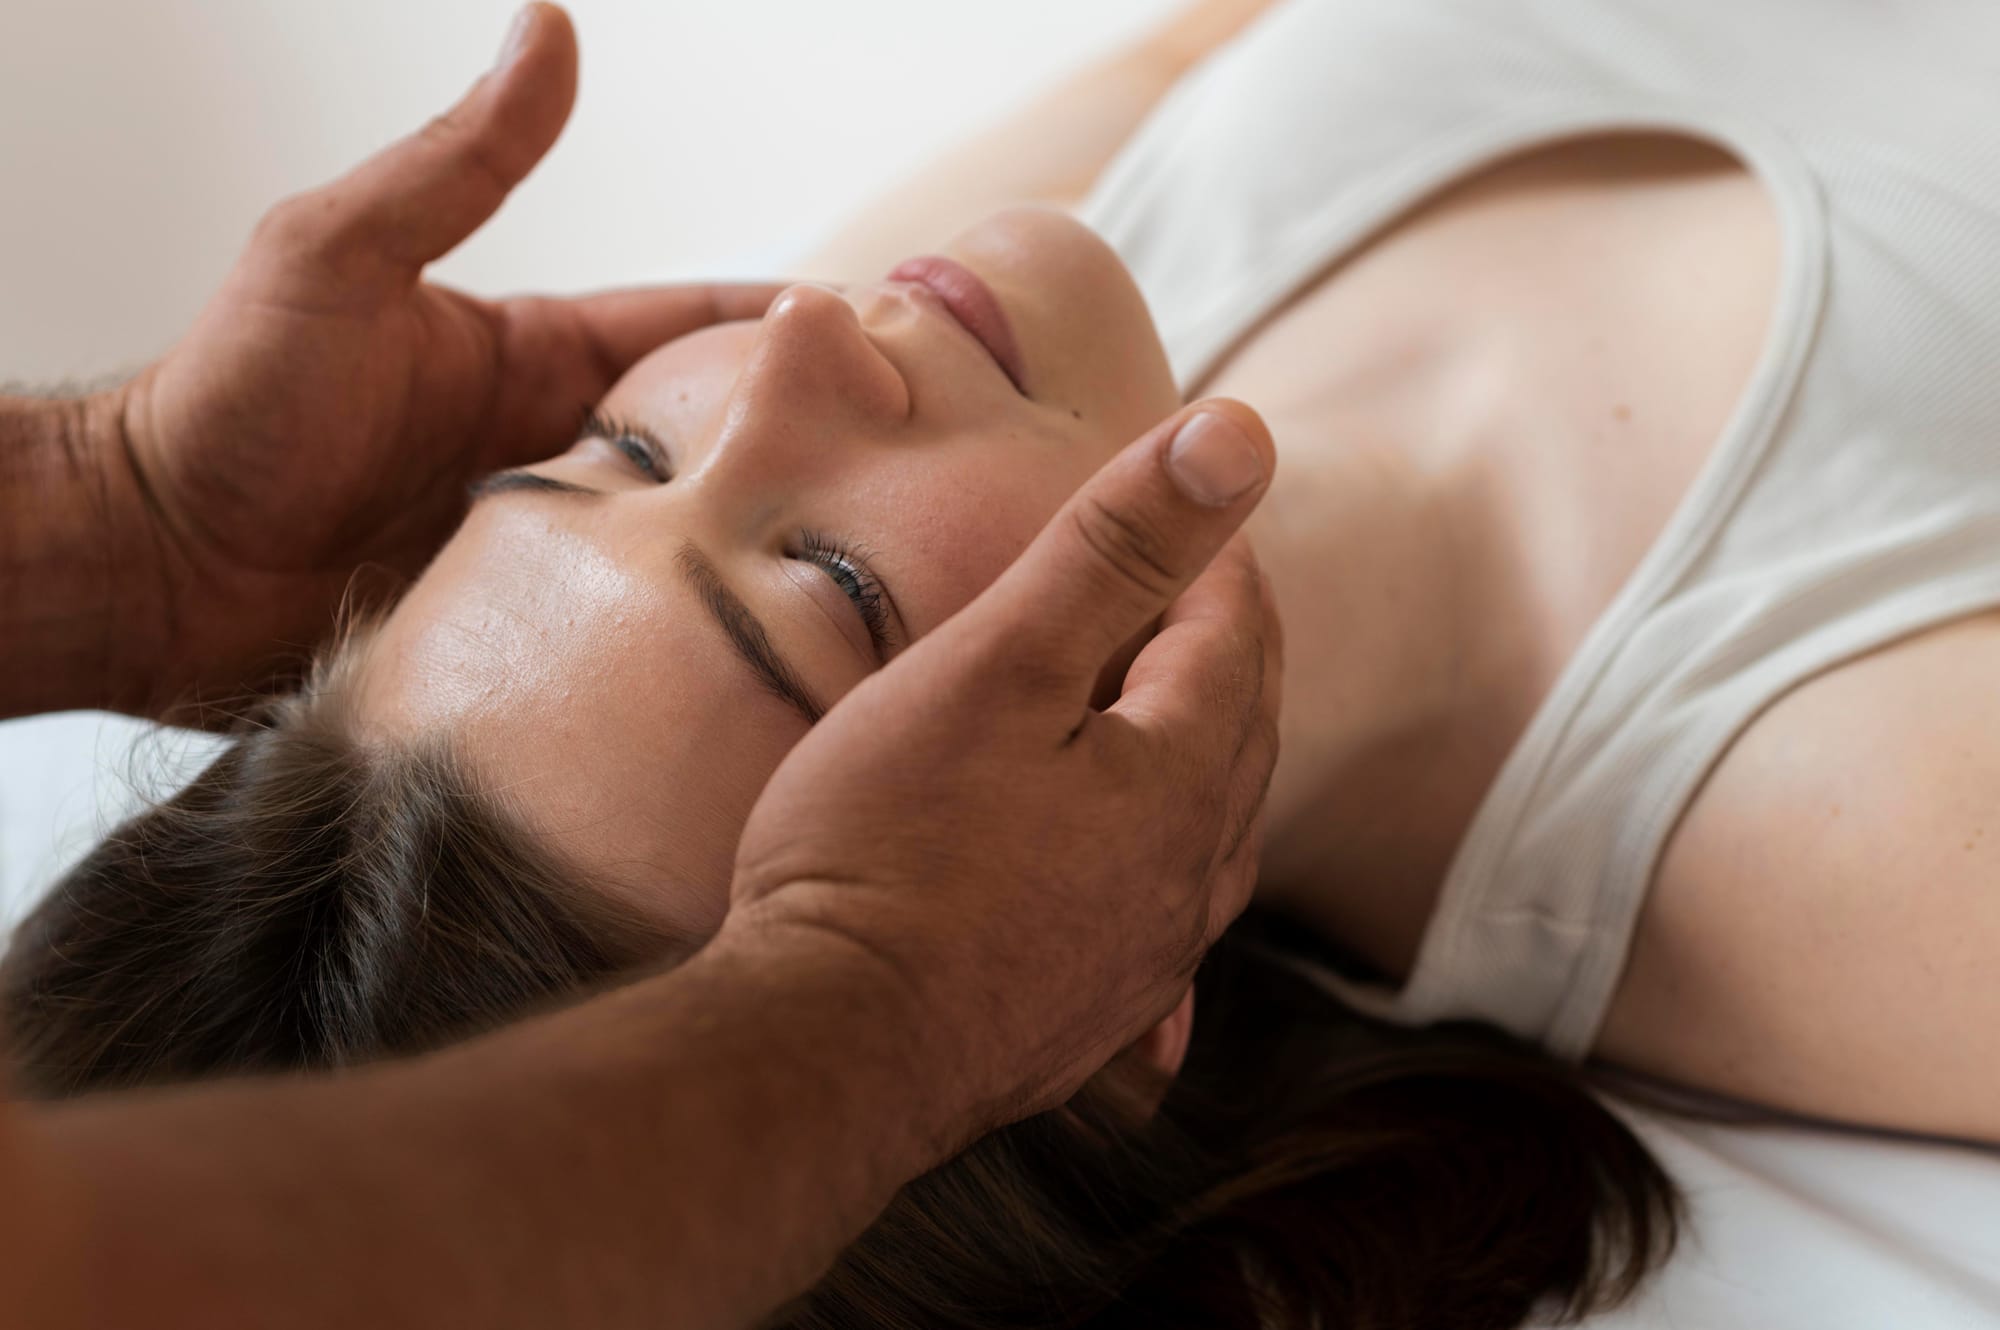 osteopathy-patient-getting-treatment-massage.jpg